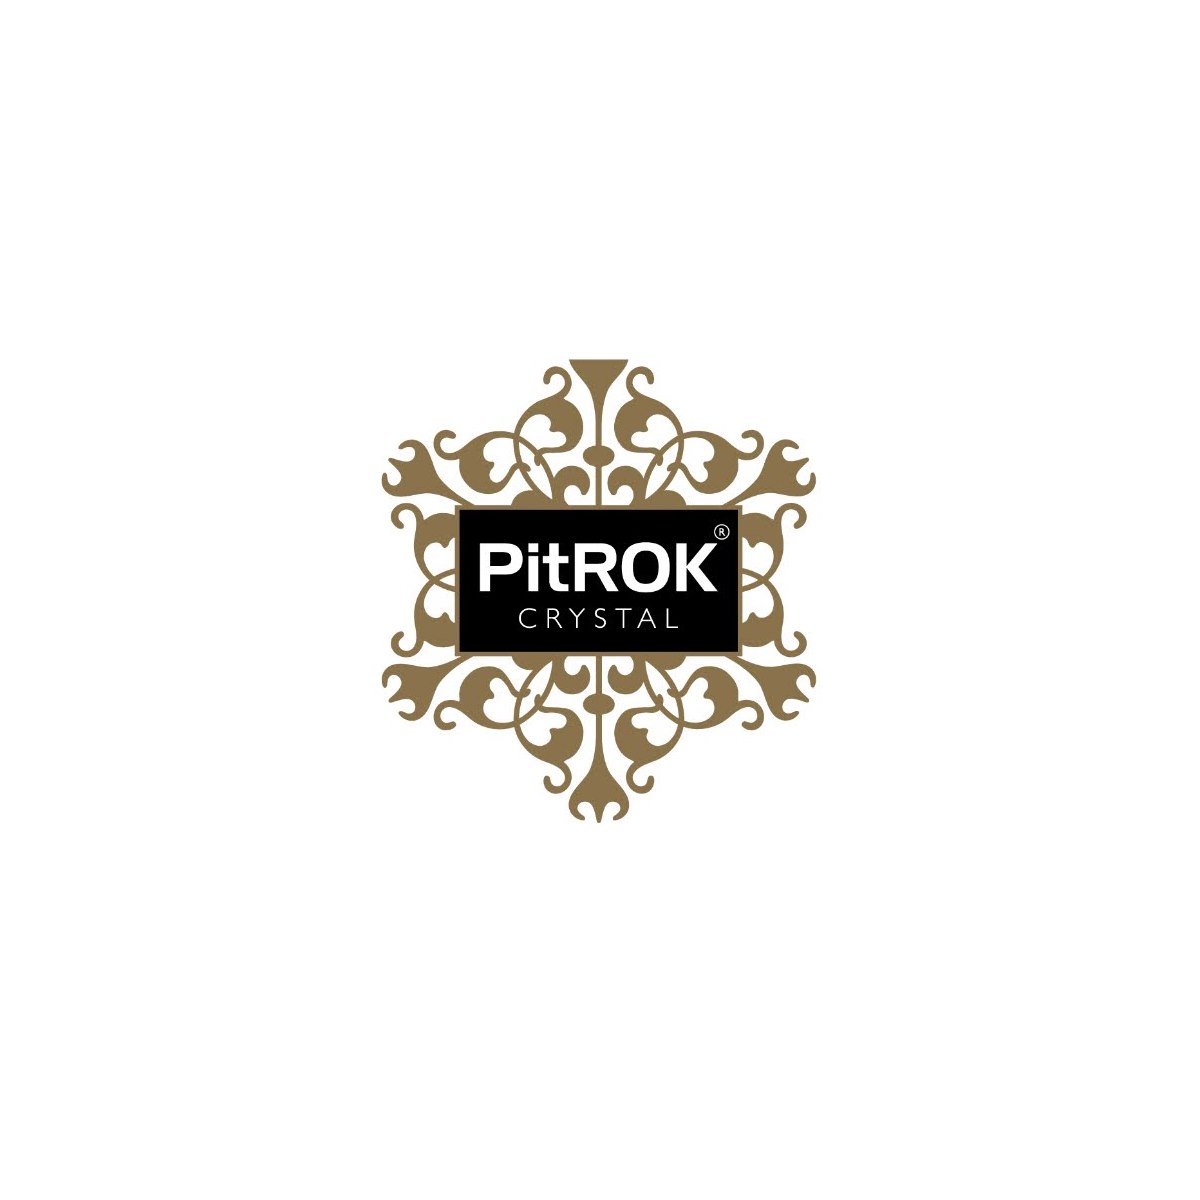 Where to Buy Pitrok